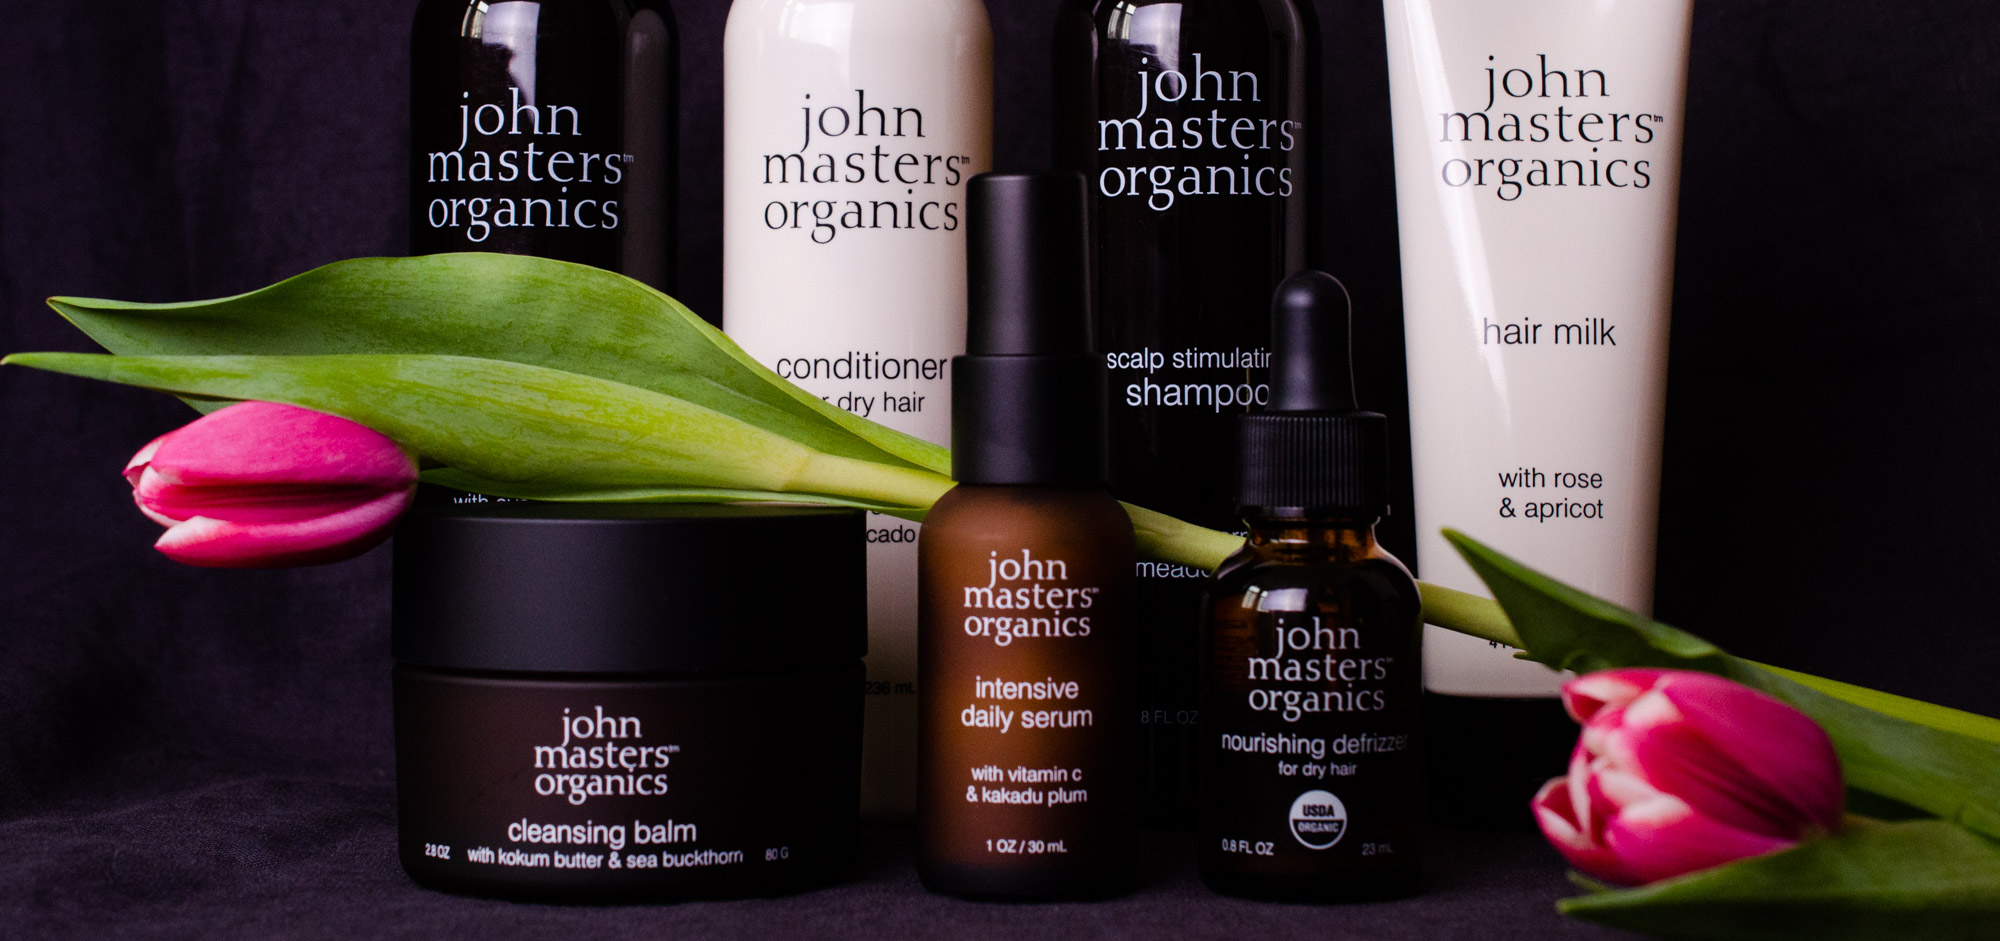 John Masters Organics haircare and skincare